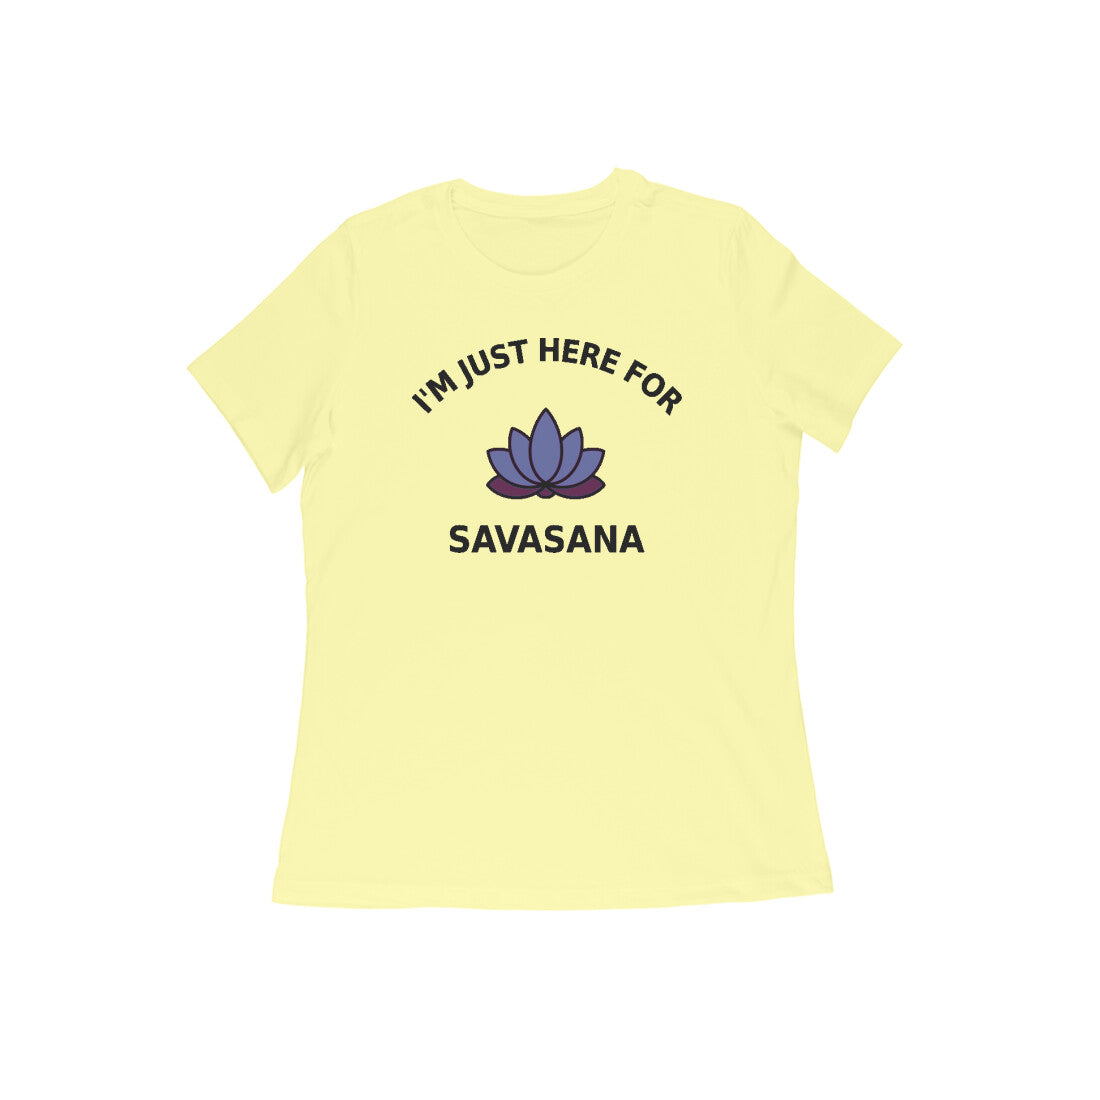 I’m just here for the savasana. Yoga T-shirt